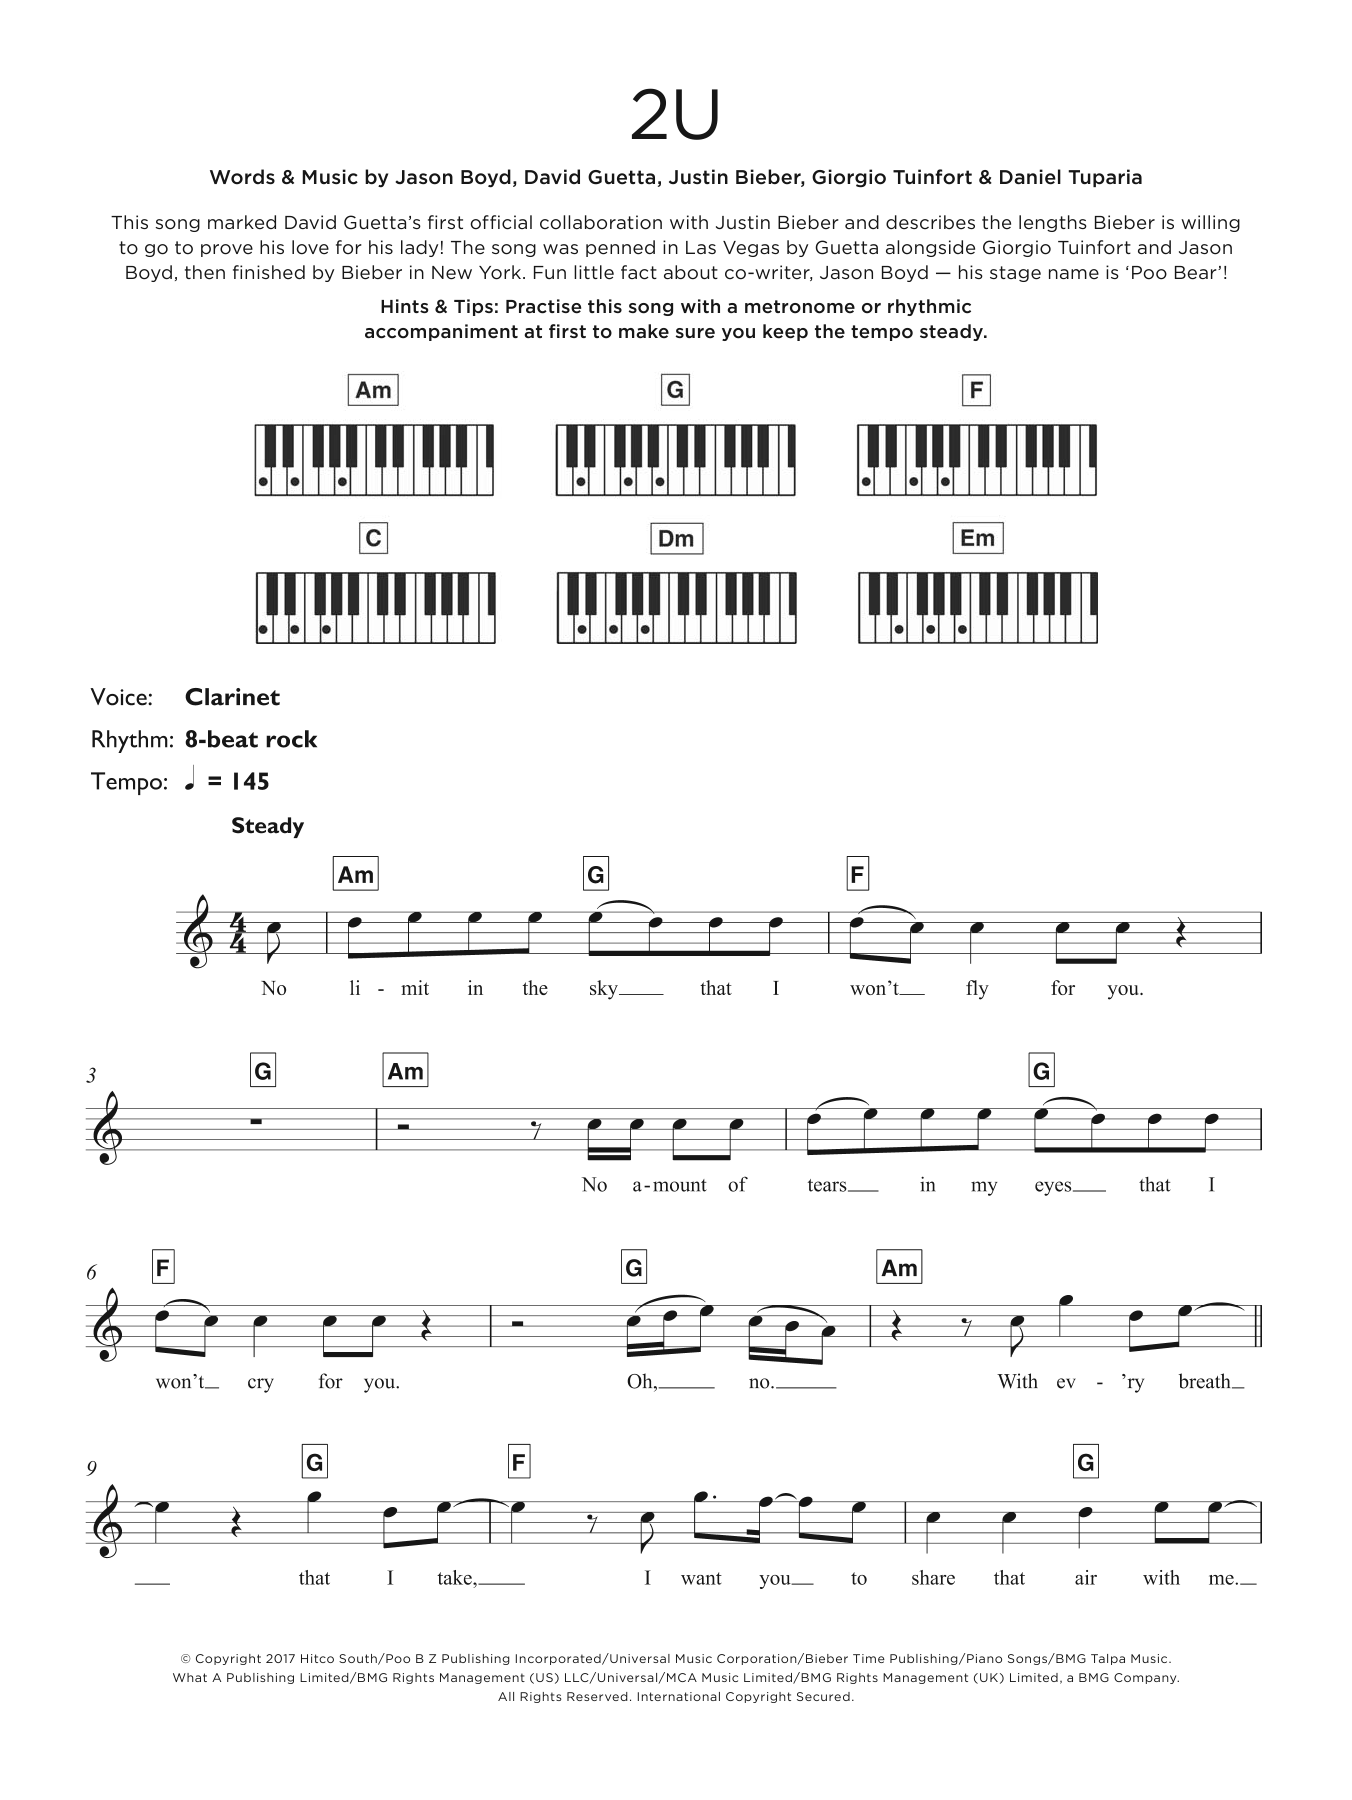 David Guetta 2U (featuring Justin Bieber) Sheet Music Notes & Chords for Keyboard - Download or Print PDF